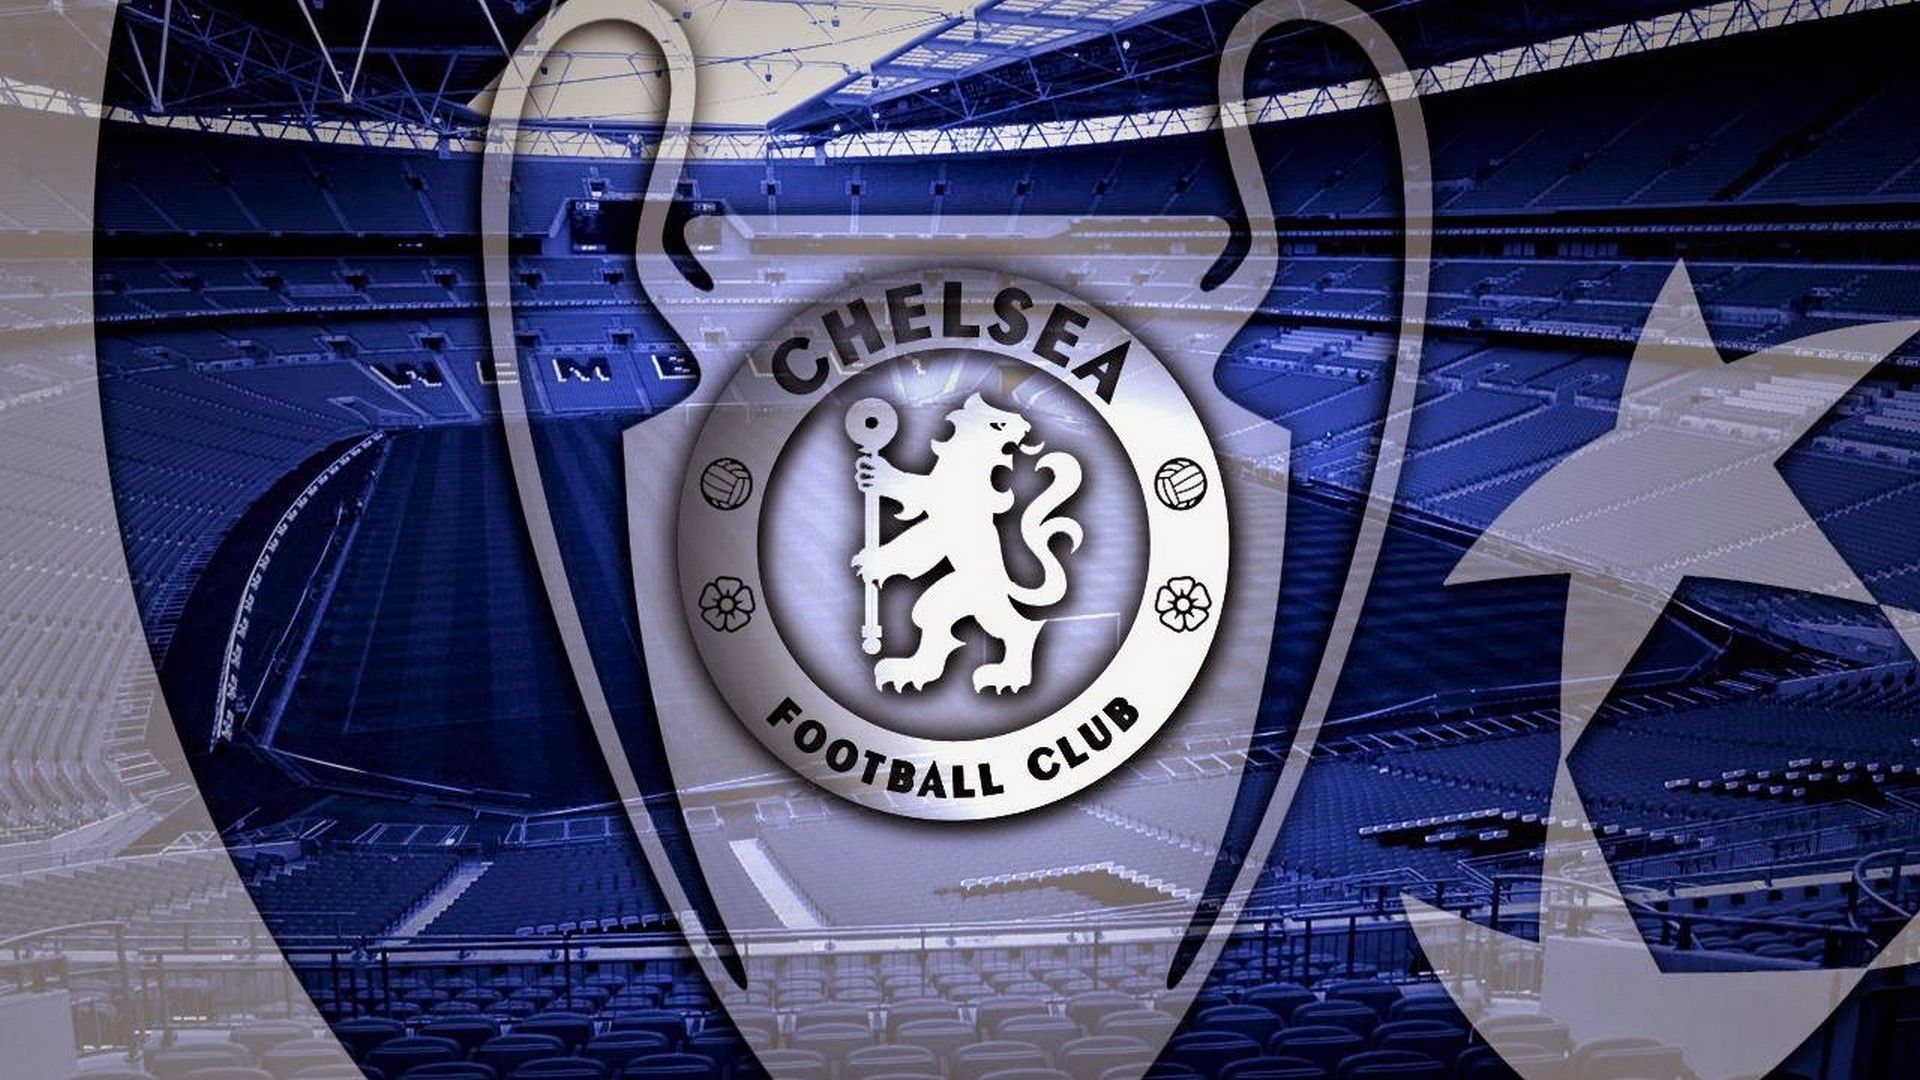 Chelsea Champions League Wallpaper Football Wallpaper. Chelsea football club, Chelsea football club wallpaper, Chelsea football